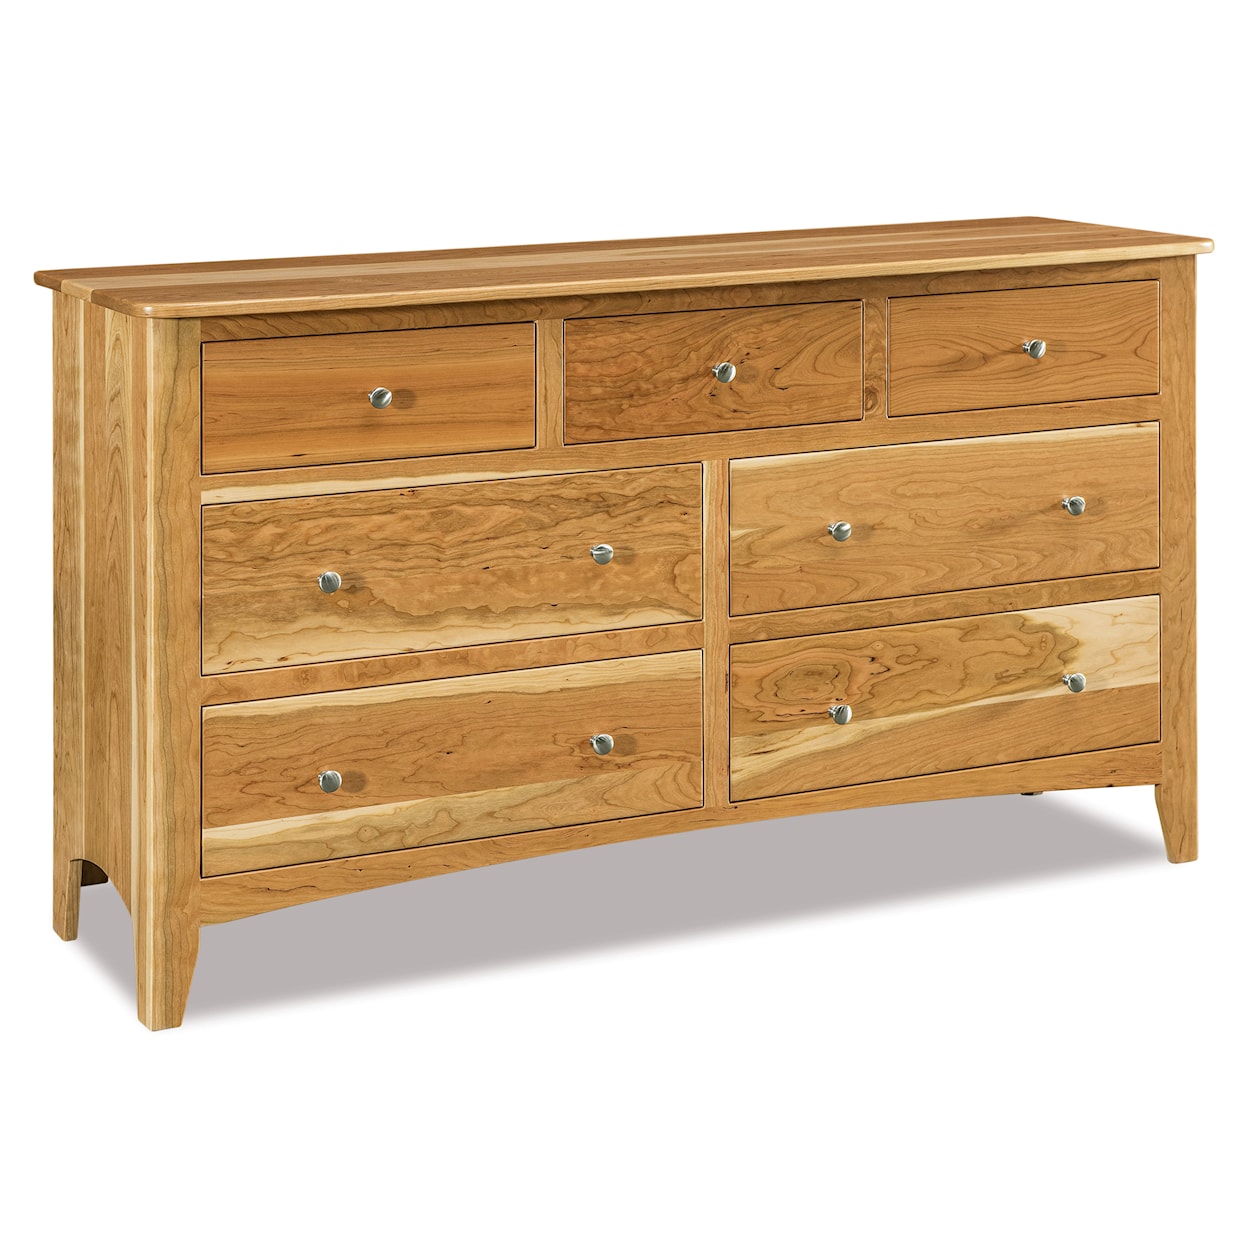 Archbold Furniture Bob Timberlake 7-Drawer Dresser